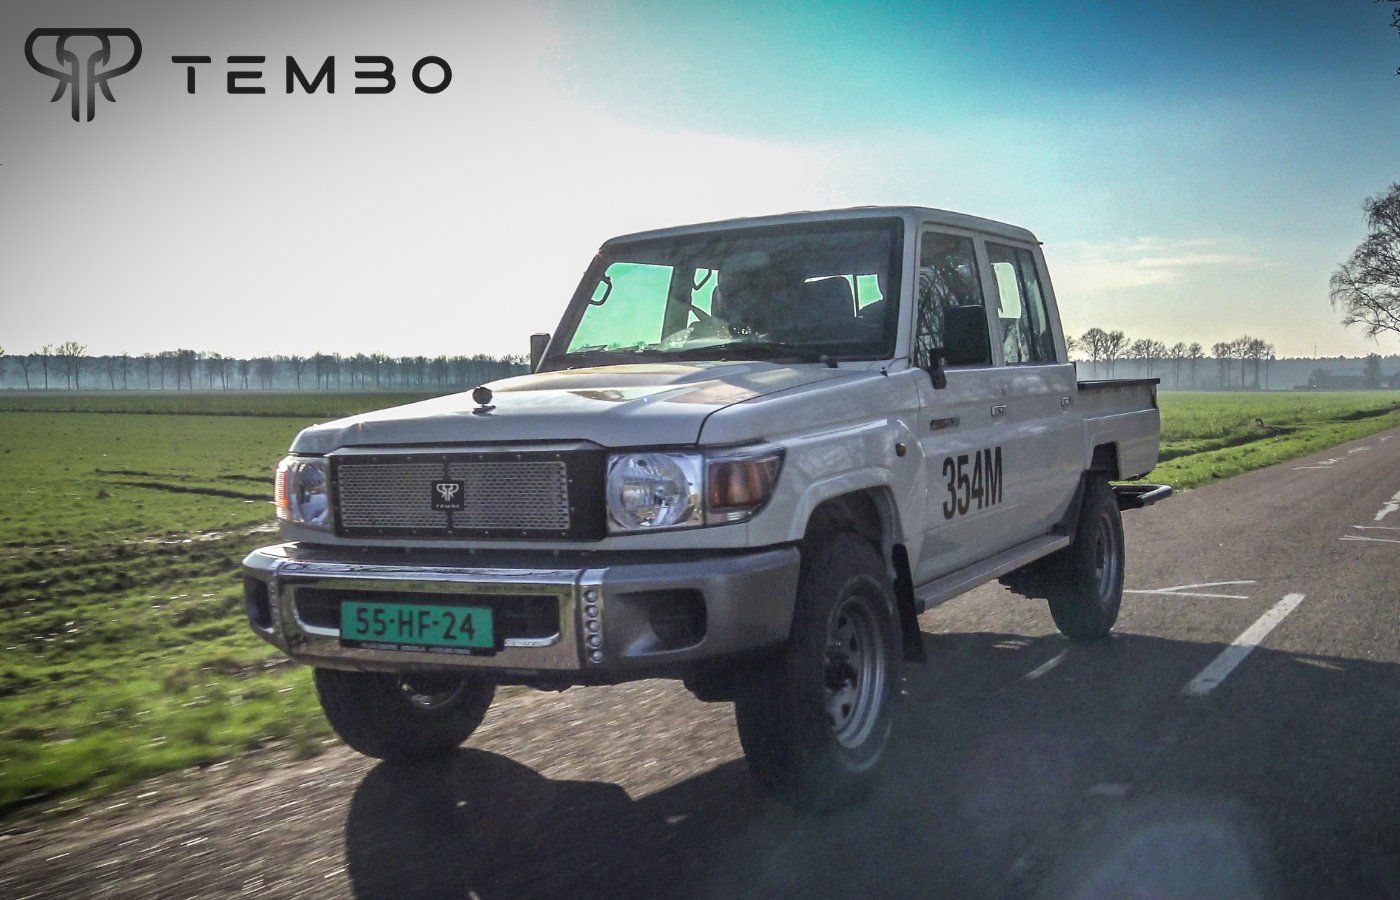 Utility Vehicle EV Conversion Company Tembo e-LV Launches New